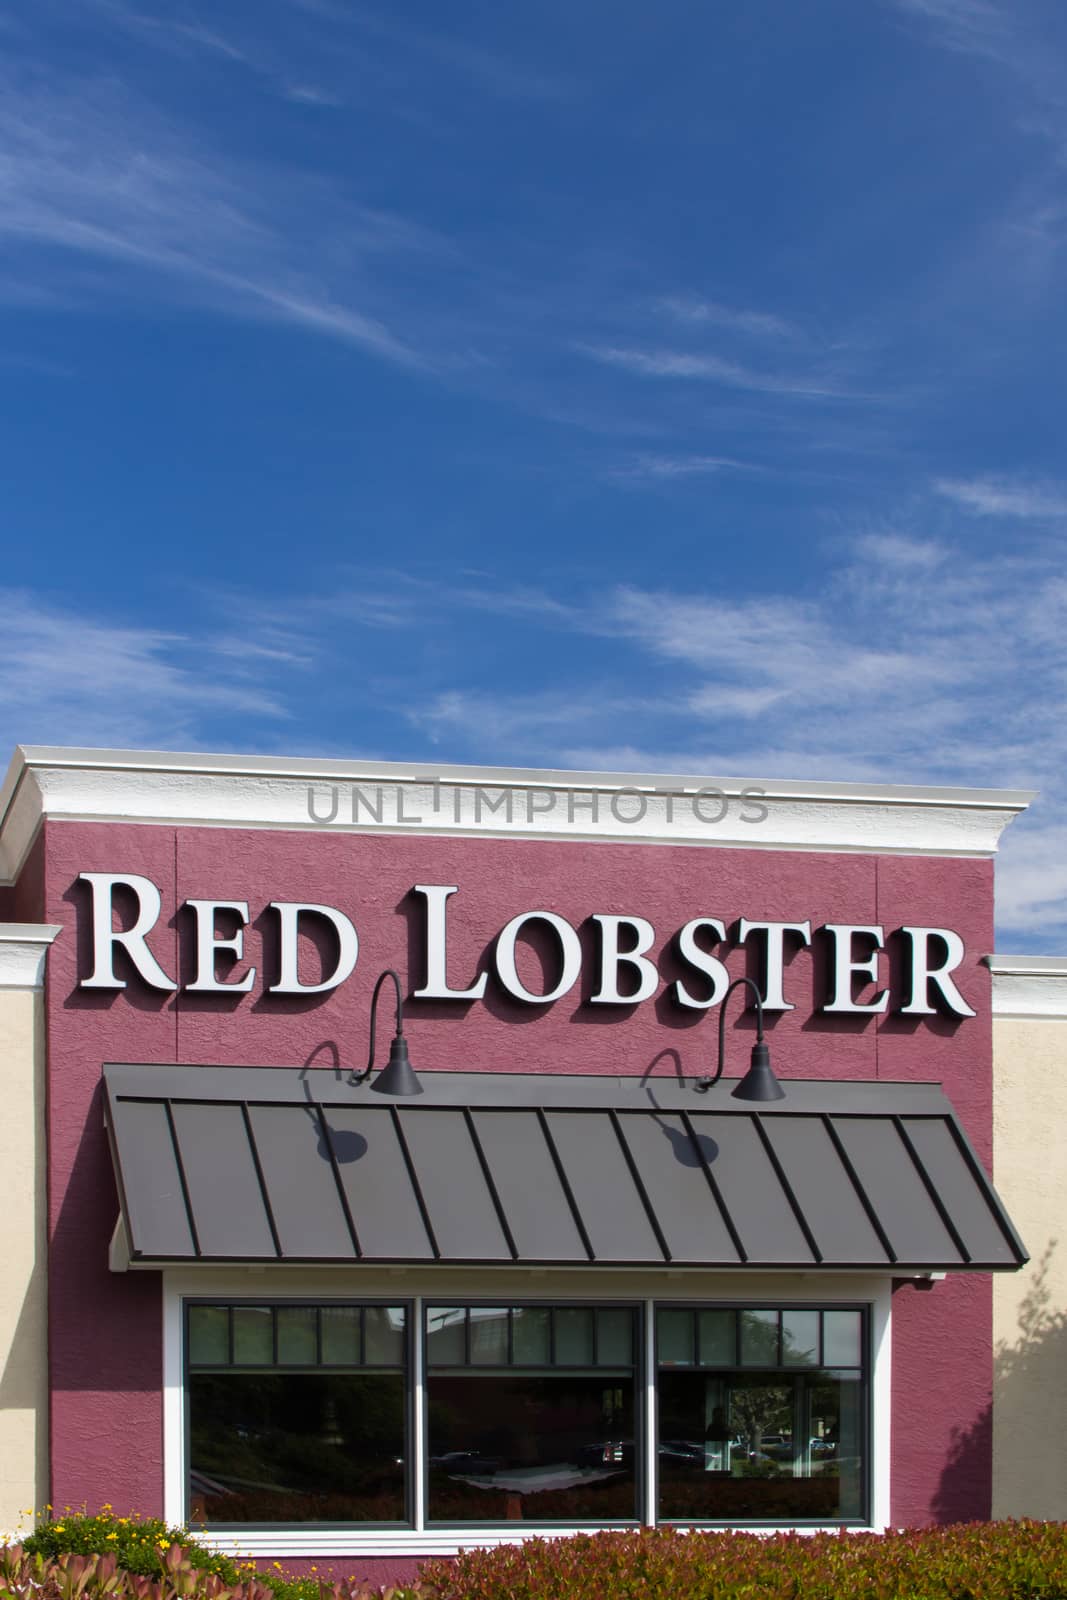 Red Lobster Restaurant exterior by wolterk